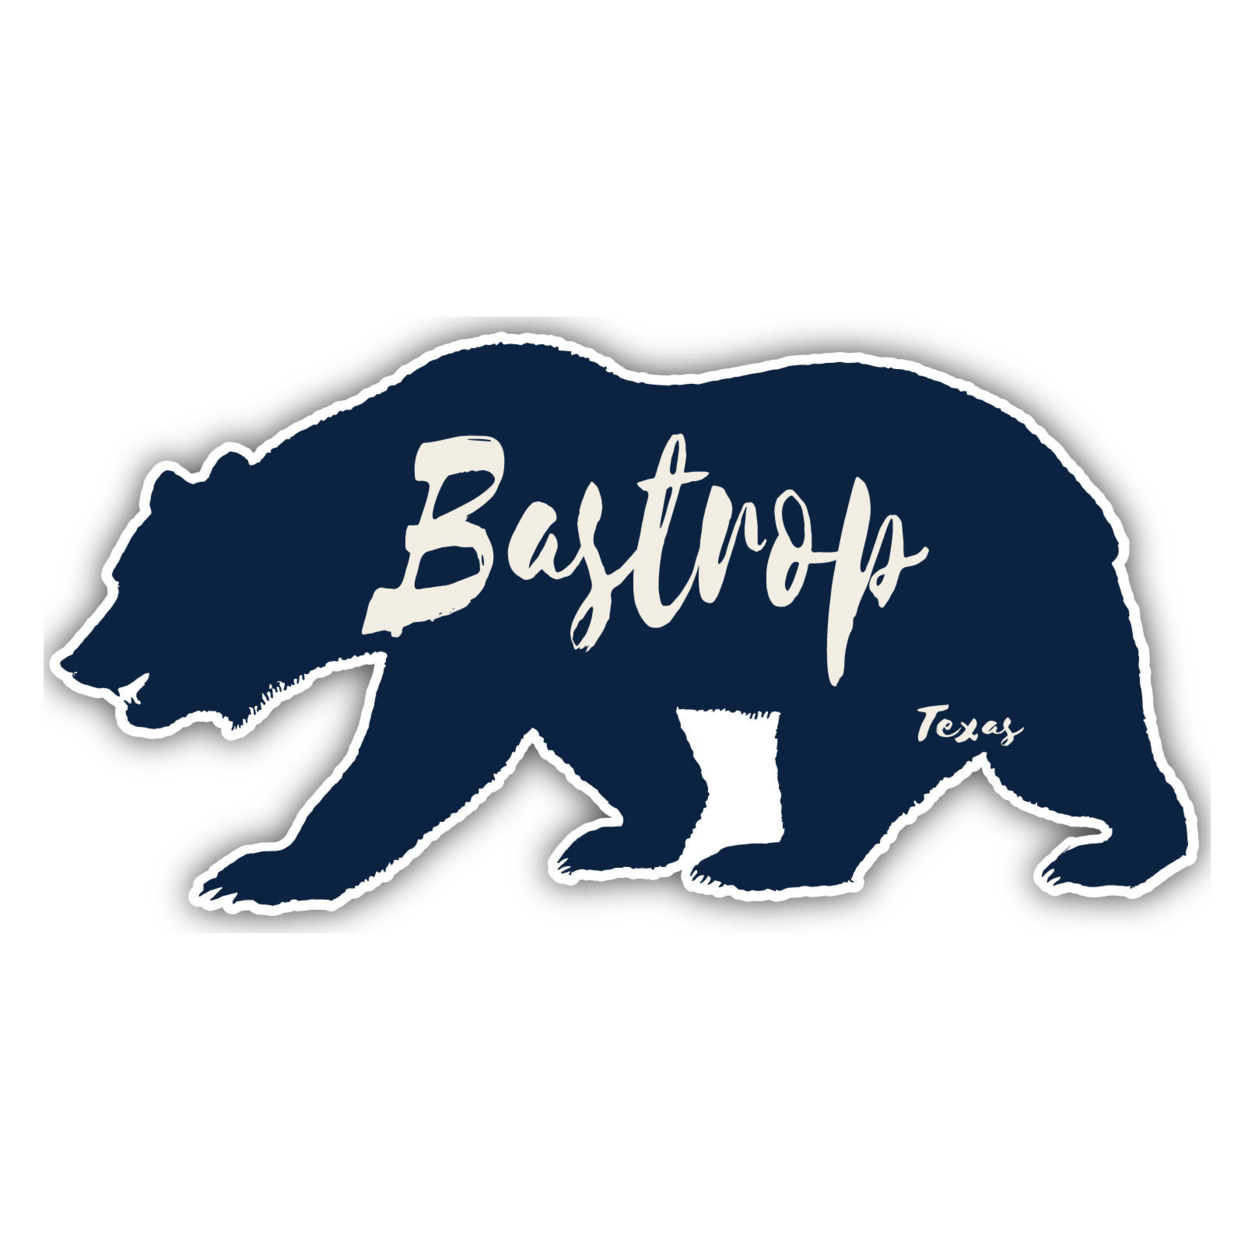 Bastrop Texas Souvenir Decorative Stickers (Choose Theme And Size) - Single Unit, 10-Inch, Bear